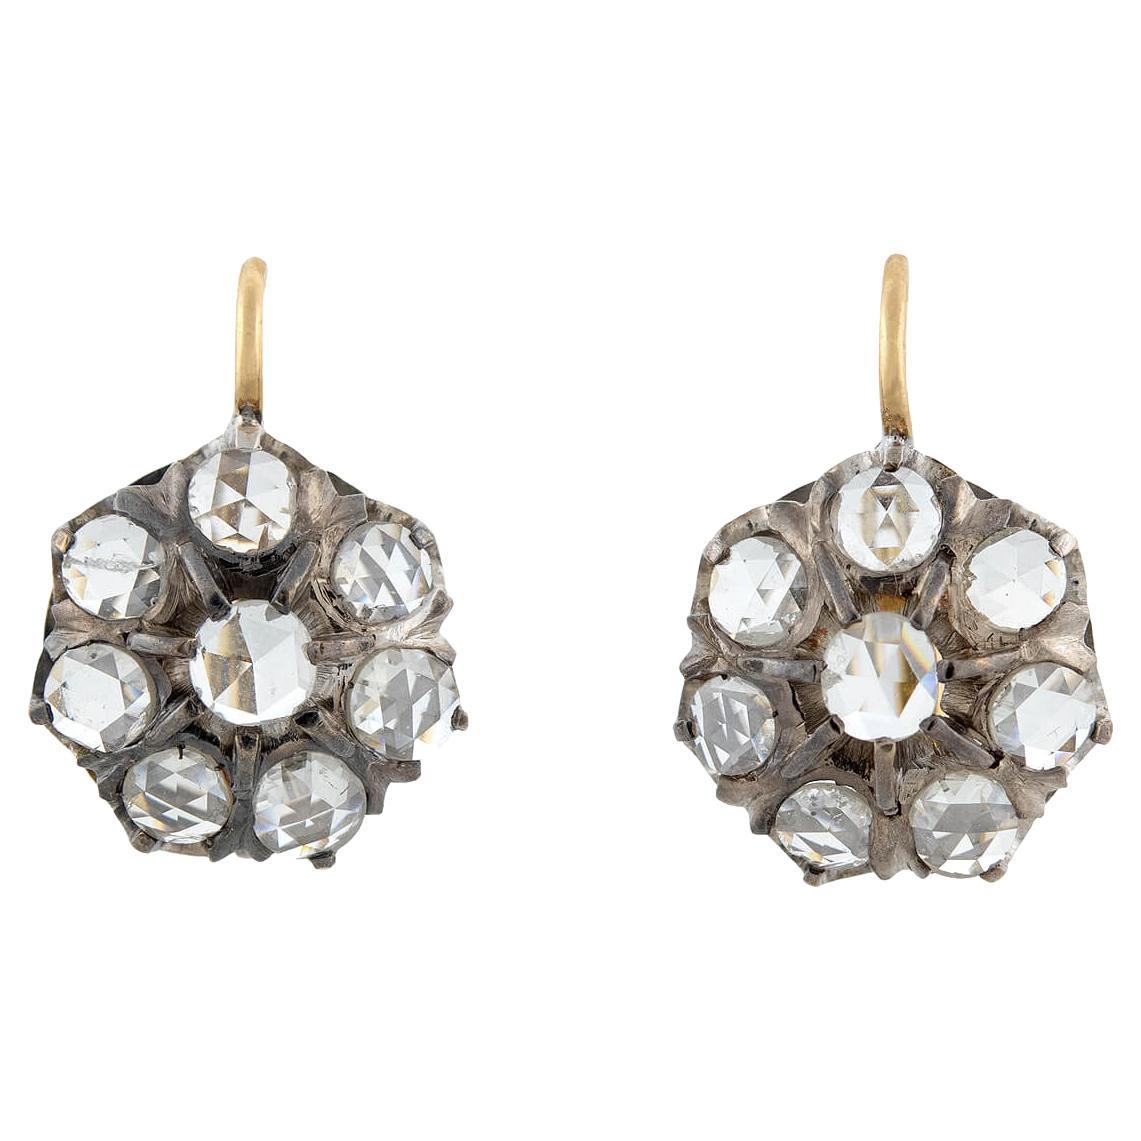 Victorian Holland Rose Cut Diamond Cluster Earrings 3ctw